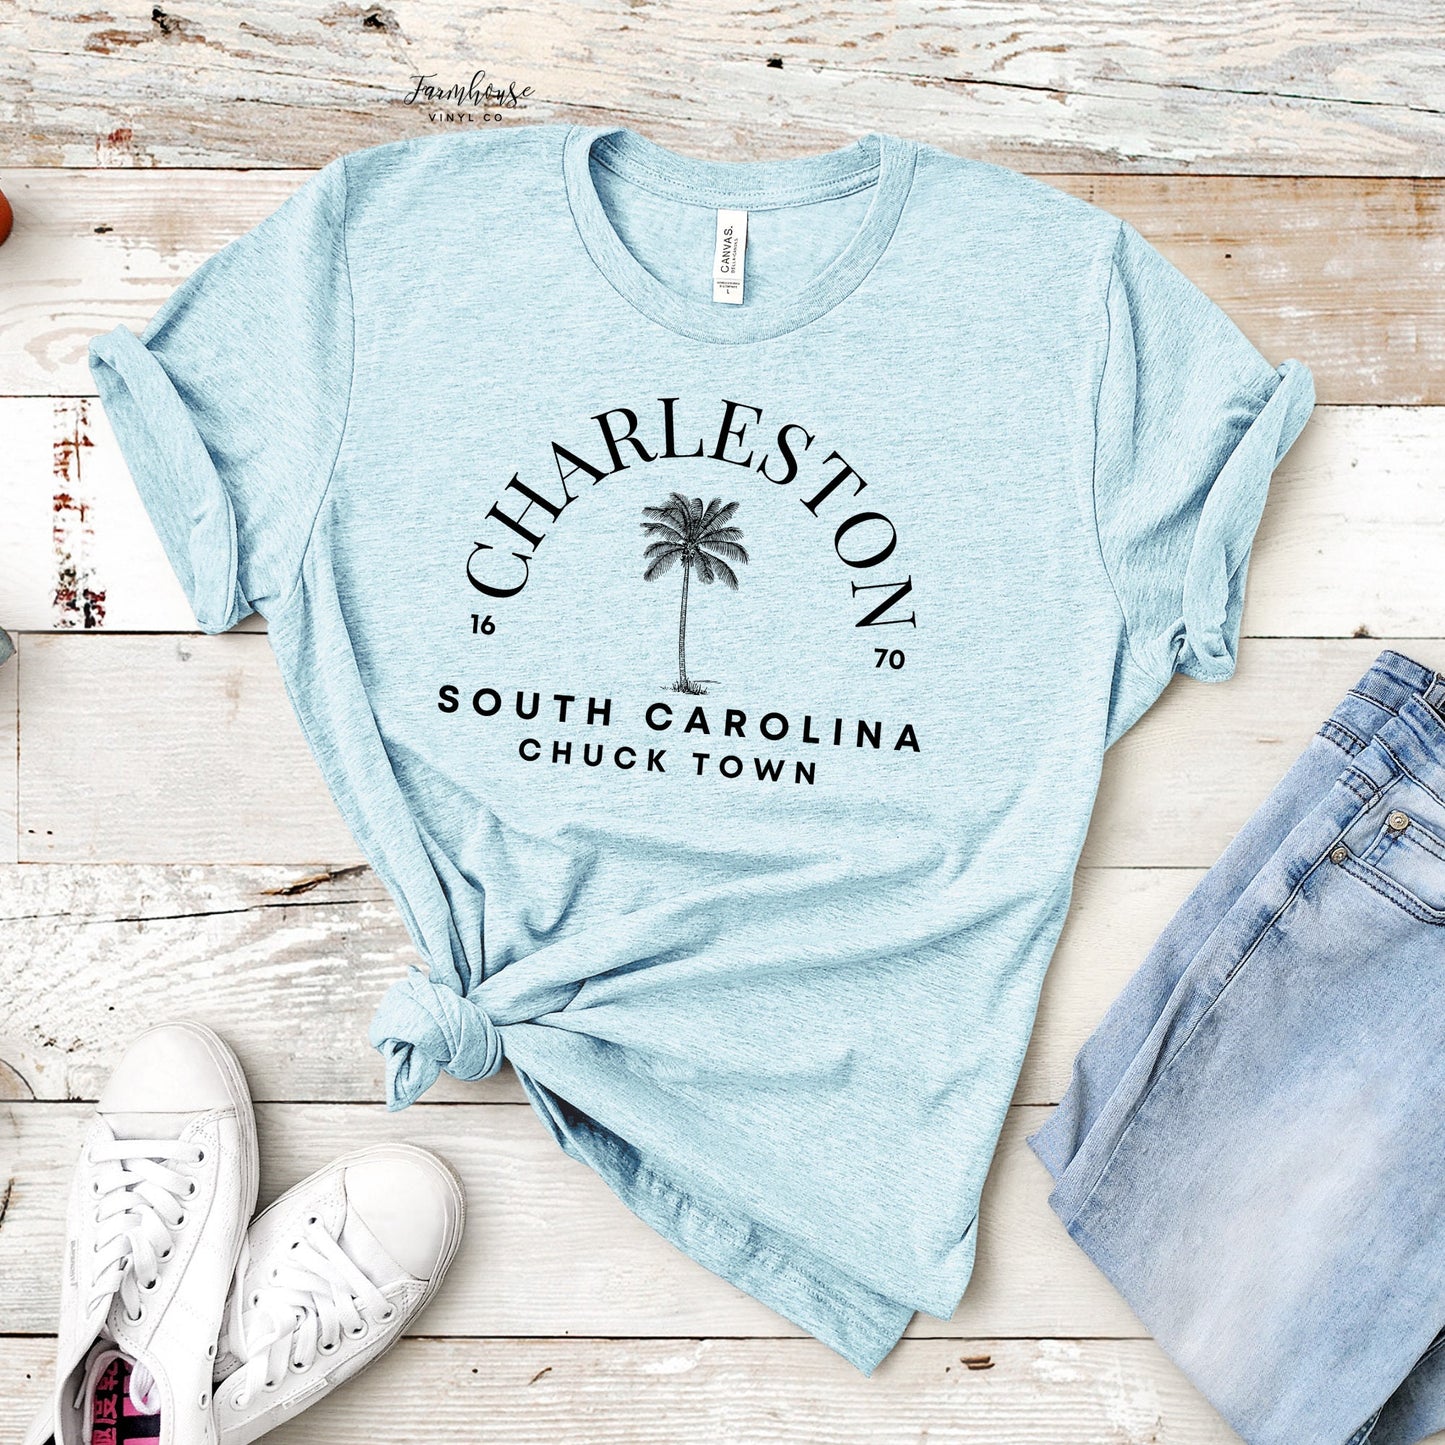 Charleston SC Shirt - Farmhouse Vinyl Co